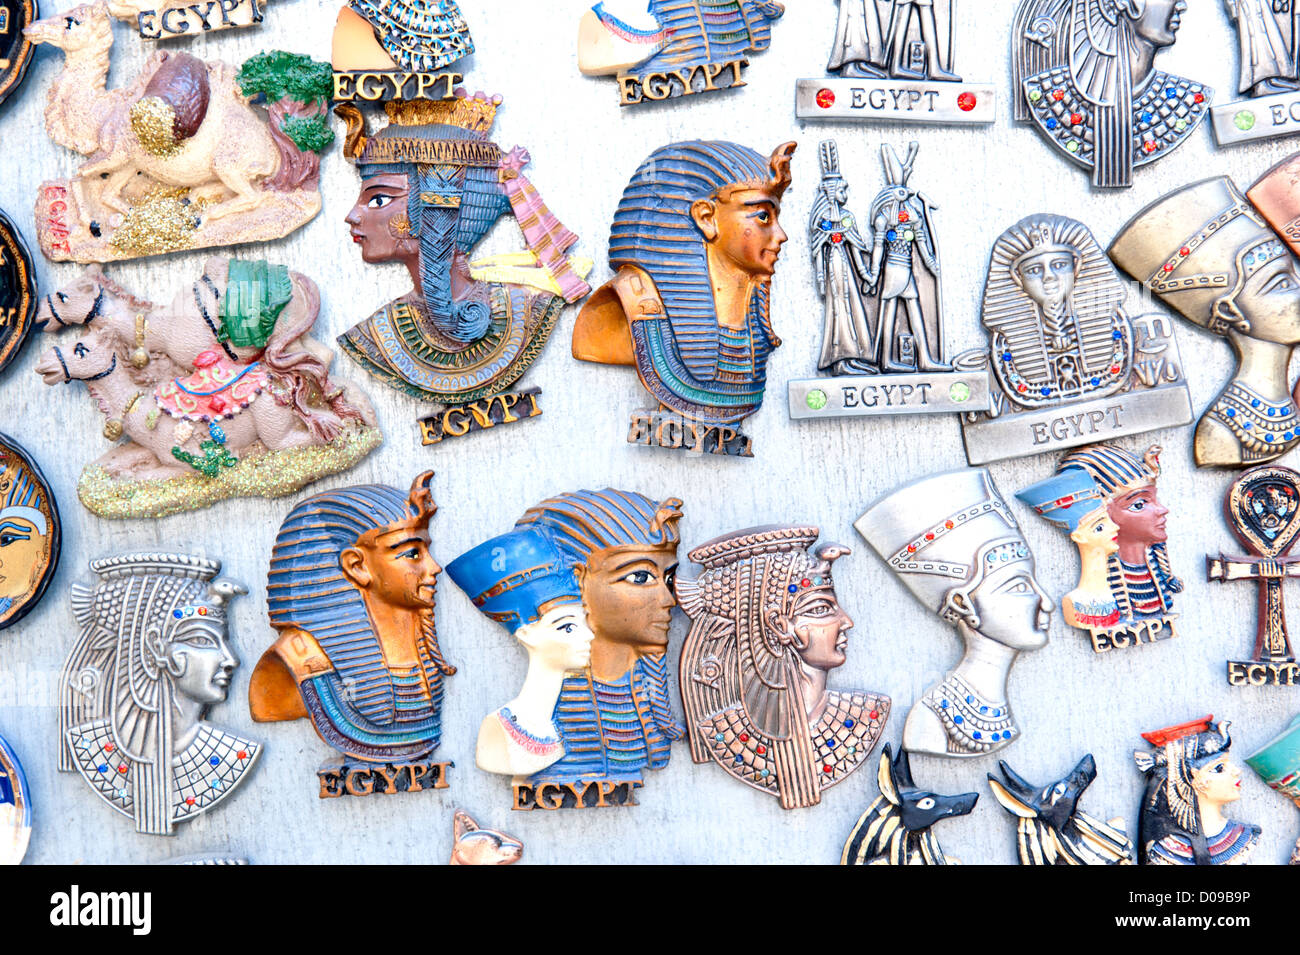 Fridge magnets for sale in Aswan, Egypt, Africa Stock Photo - Alamy